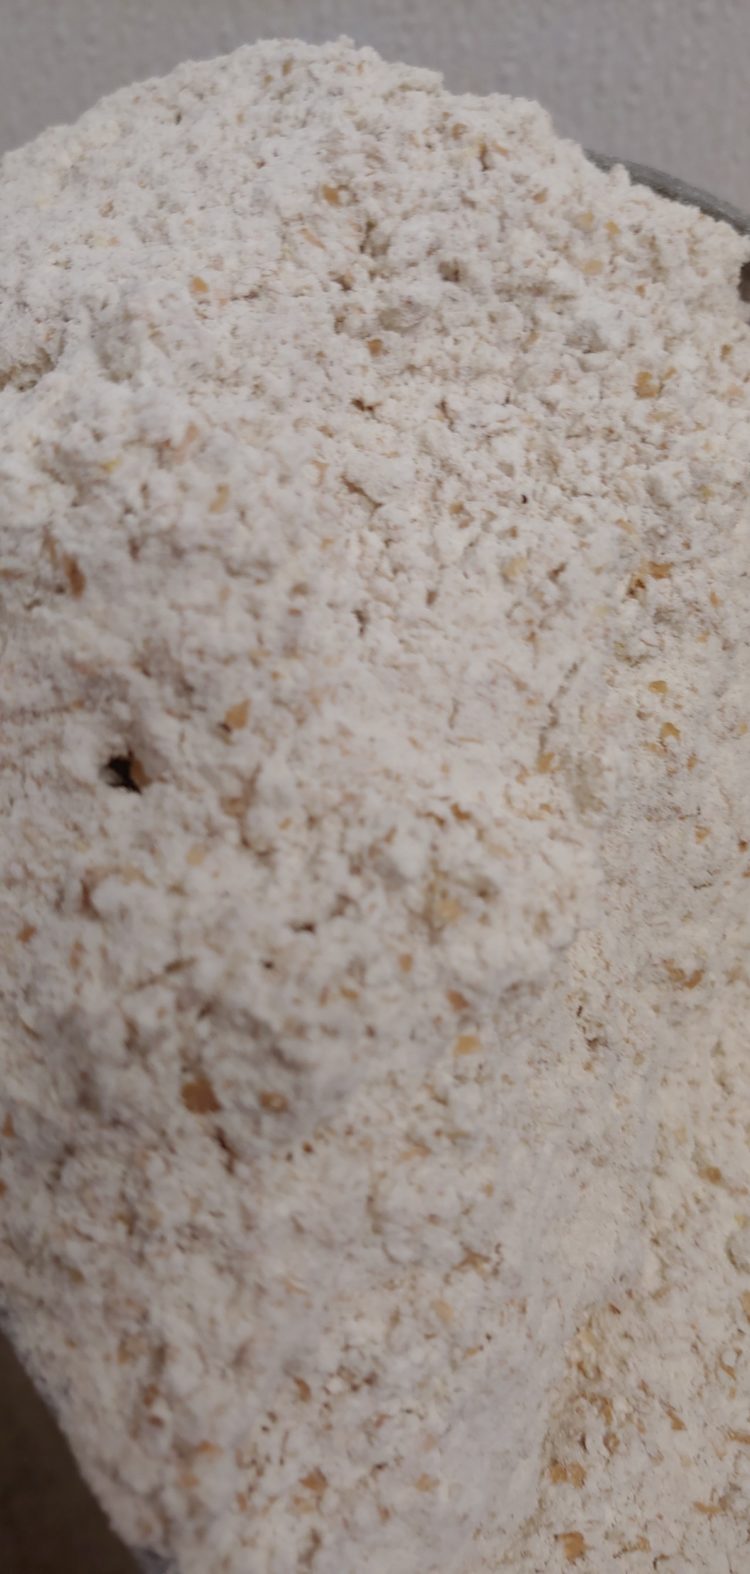 whole-wheat-flour